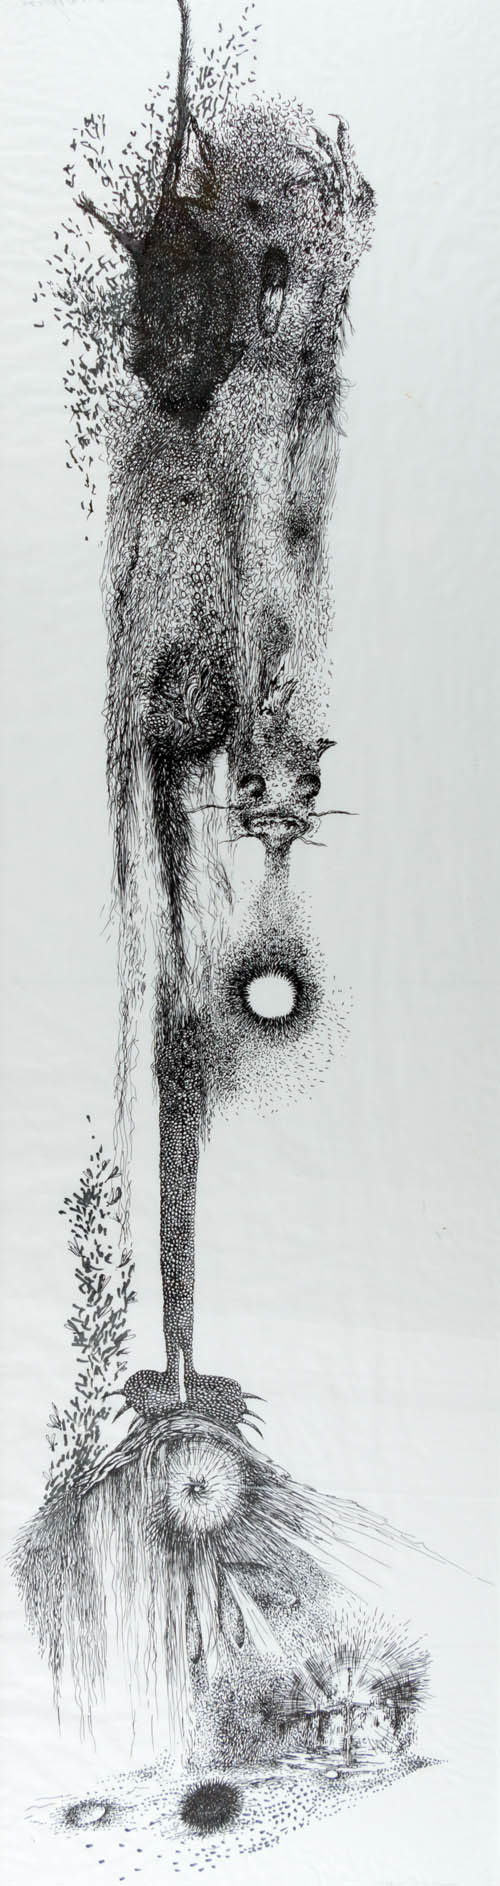 Nino Japaridze - Le bestiaire III (The Bestiary III) - 2008 ink on paper